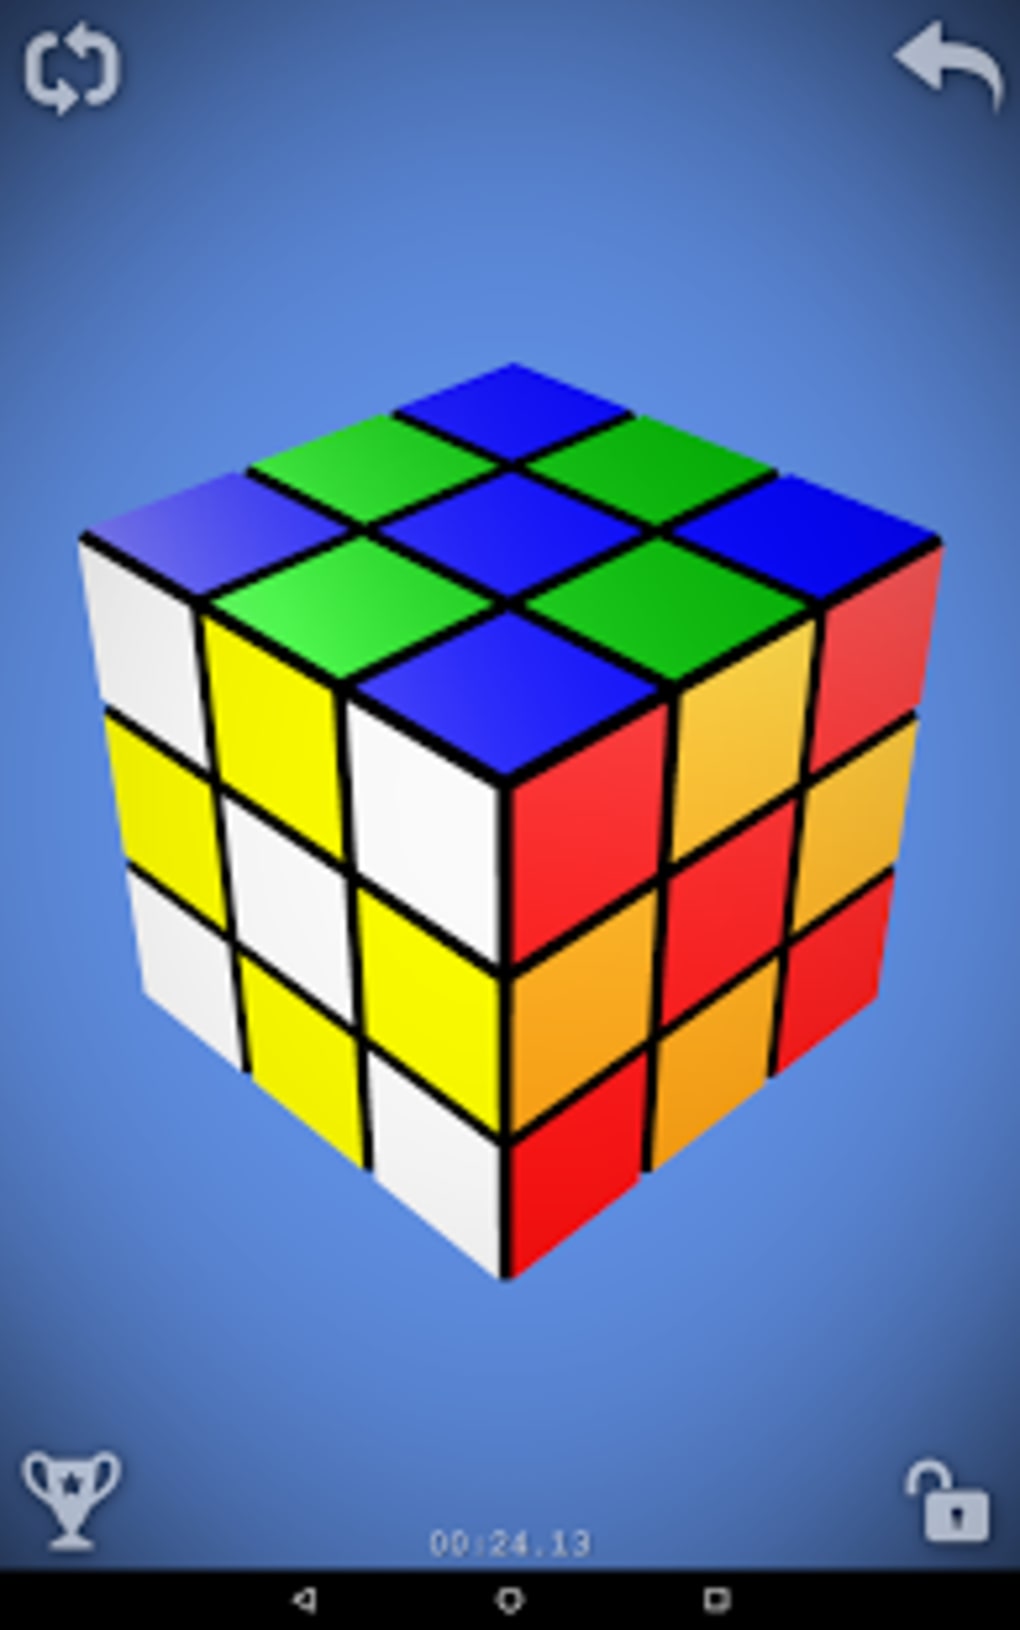 Magic Cube Puzzle 3D download the last version for windows